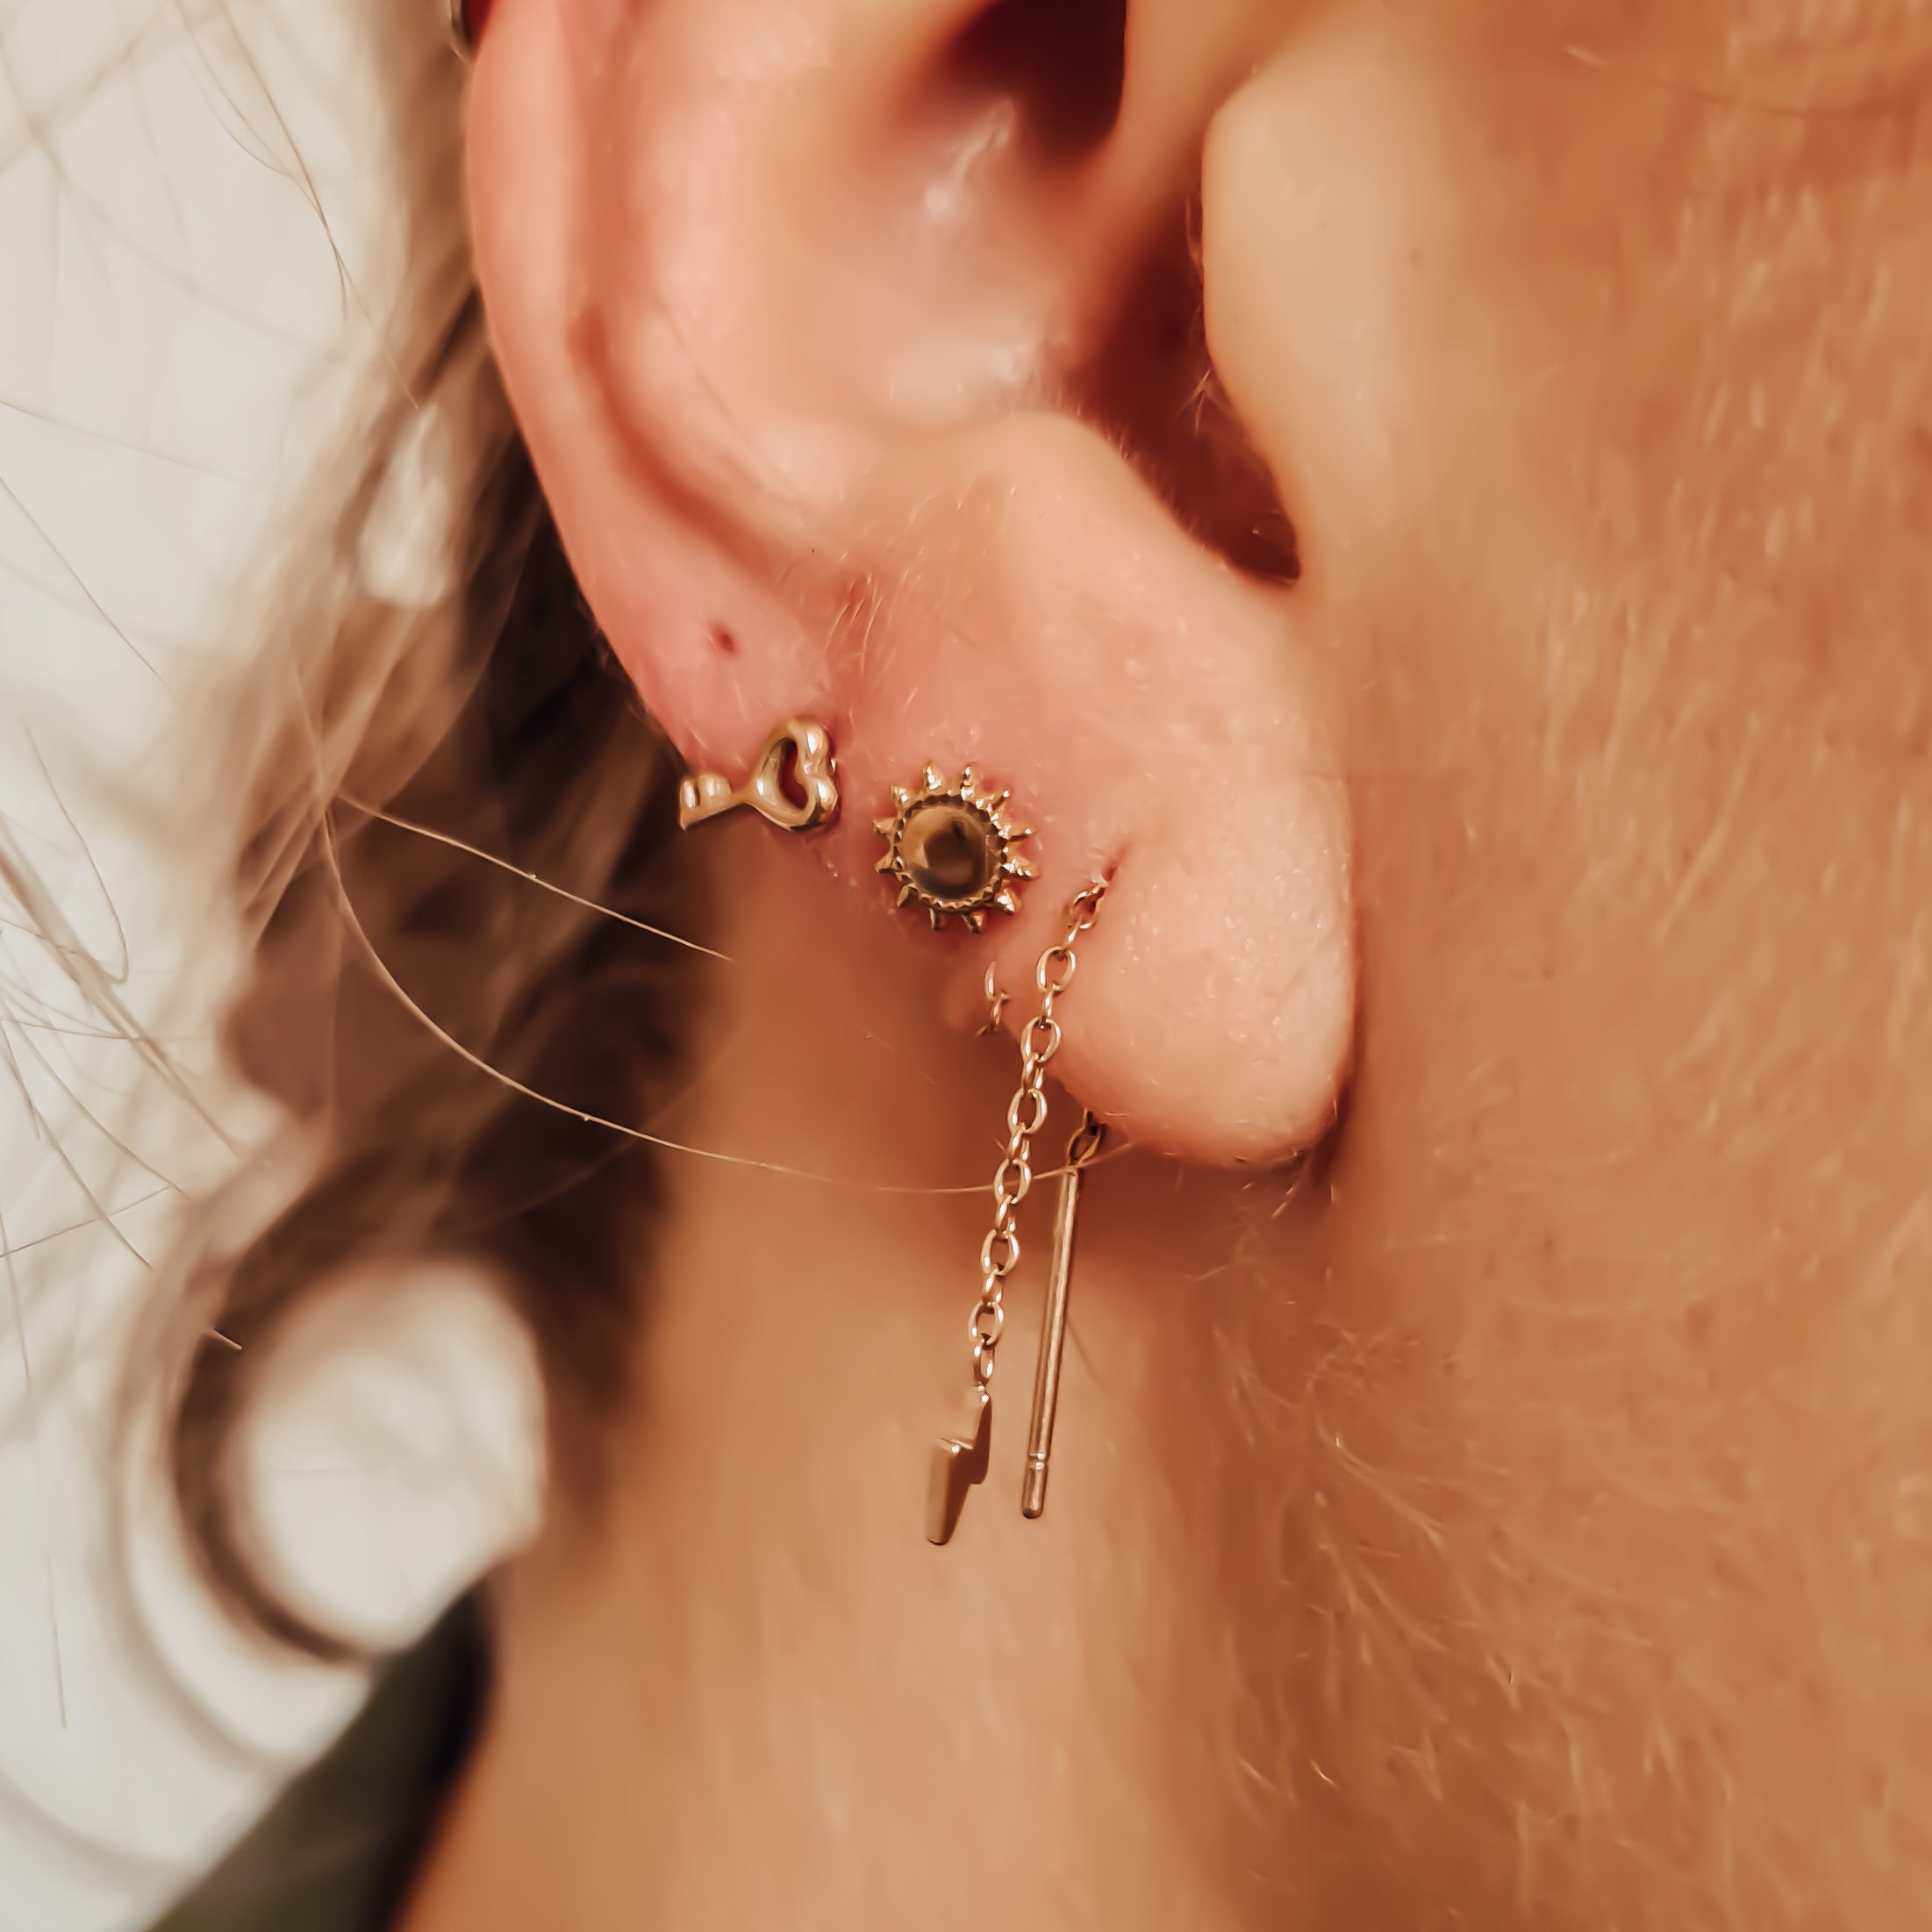 Necklace earrings lightning